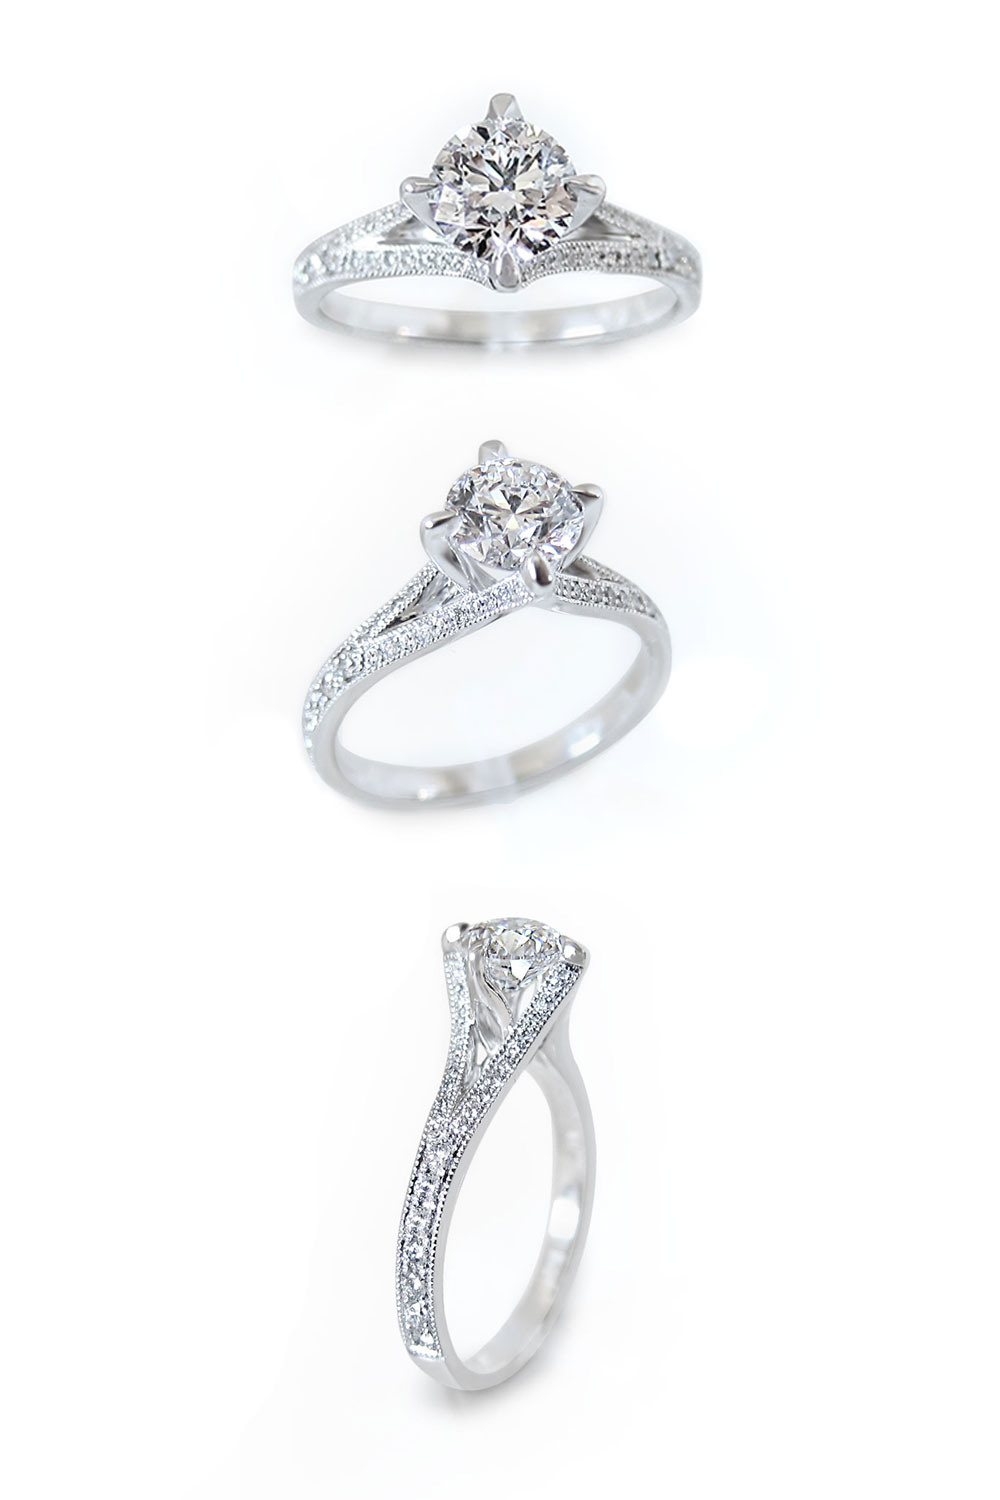 Natural diamond handmade white gold engagement ring